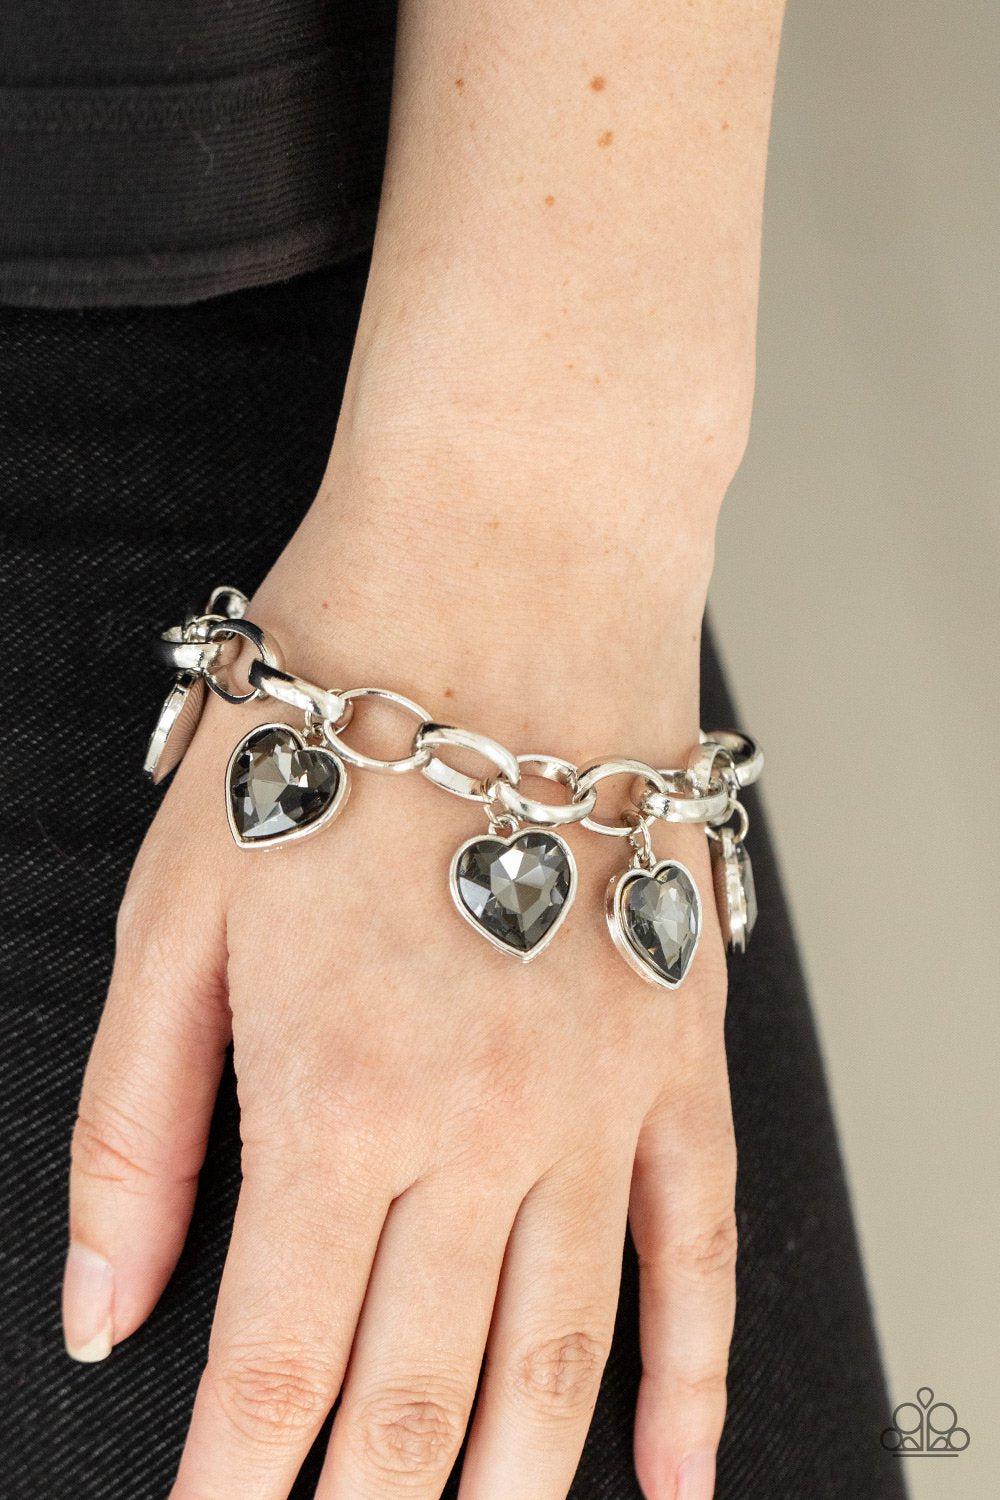 Candy Heart Charmer Silver Rhinestone Heart Charm Bracelet - Paparazzi Accessories- model - CarasShop.com - $5 Jewelry by Cara Jewels